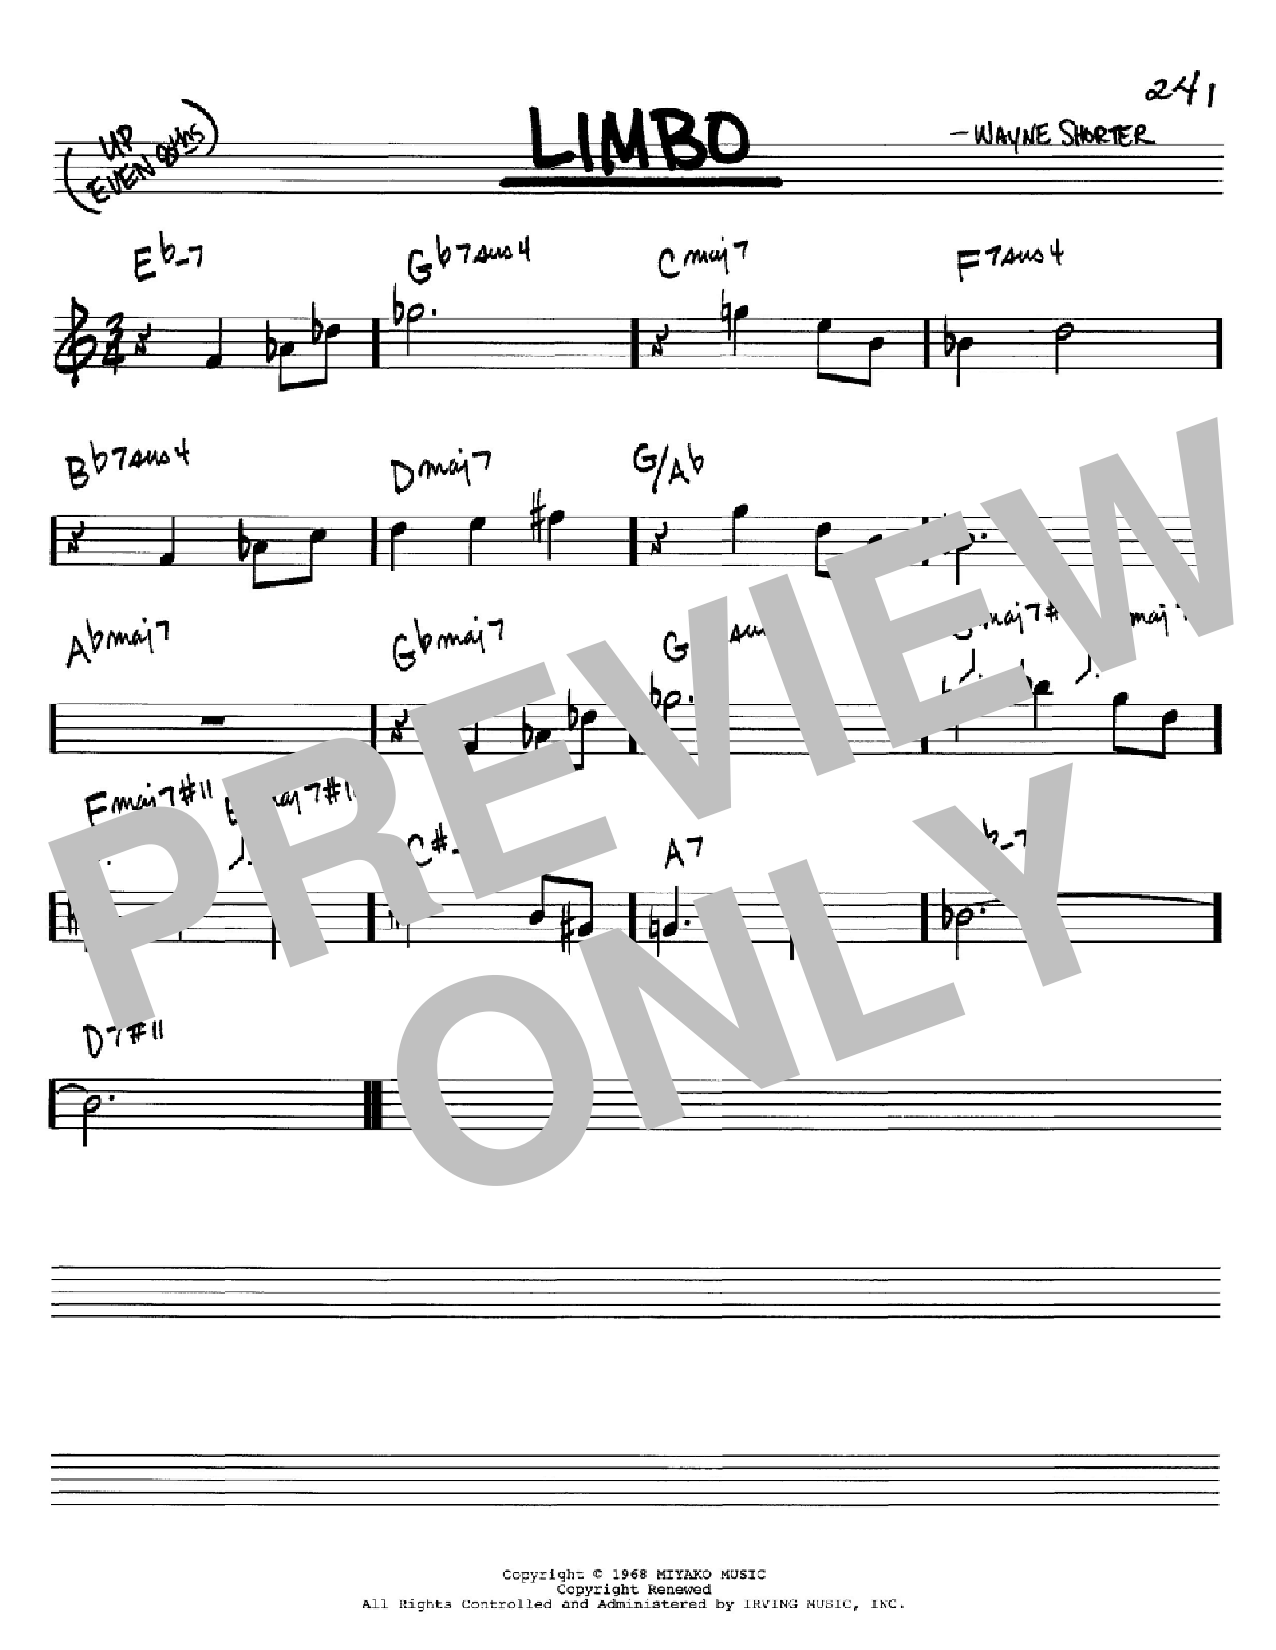 Wayne Shorter Limbo Sheet Music Notes & Chords for Real Book - Melody & Chords - C Instruments - Download or Print PDF